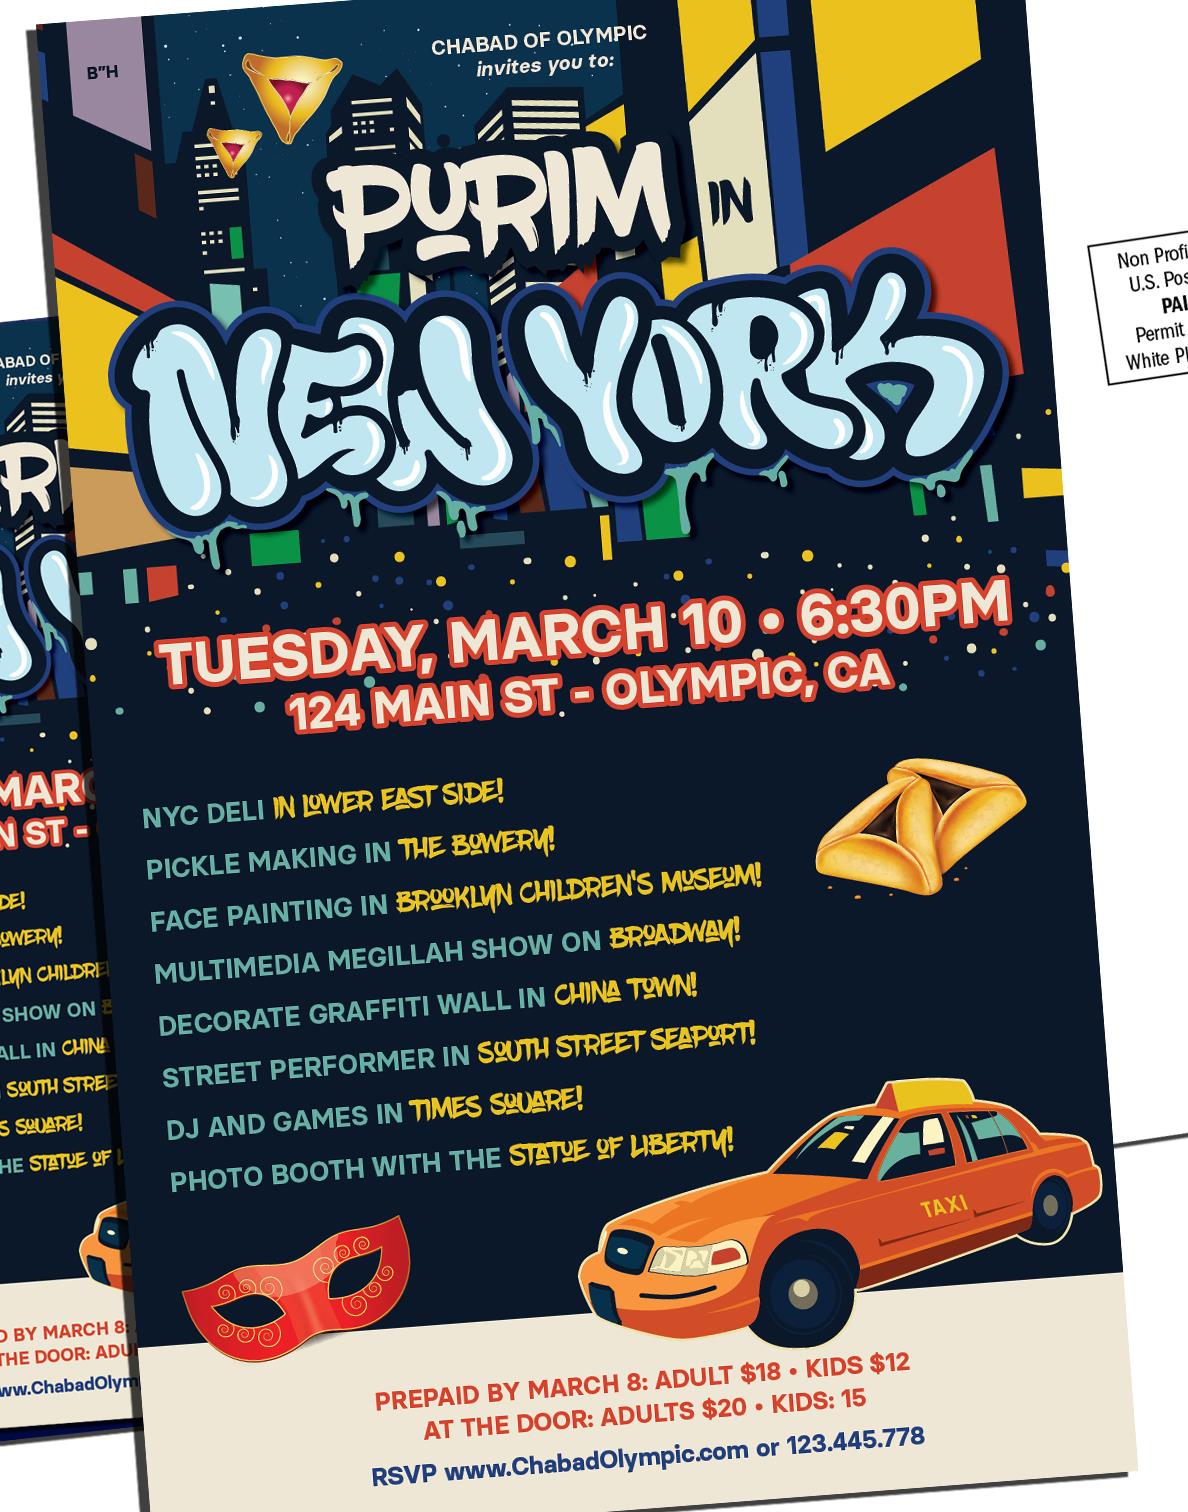 Purim in New York